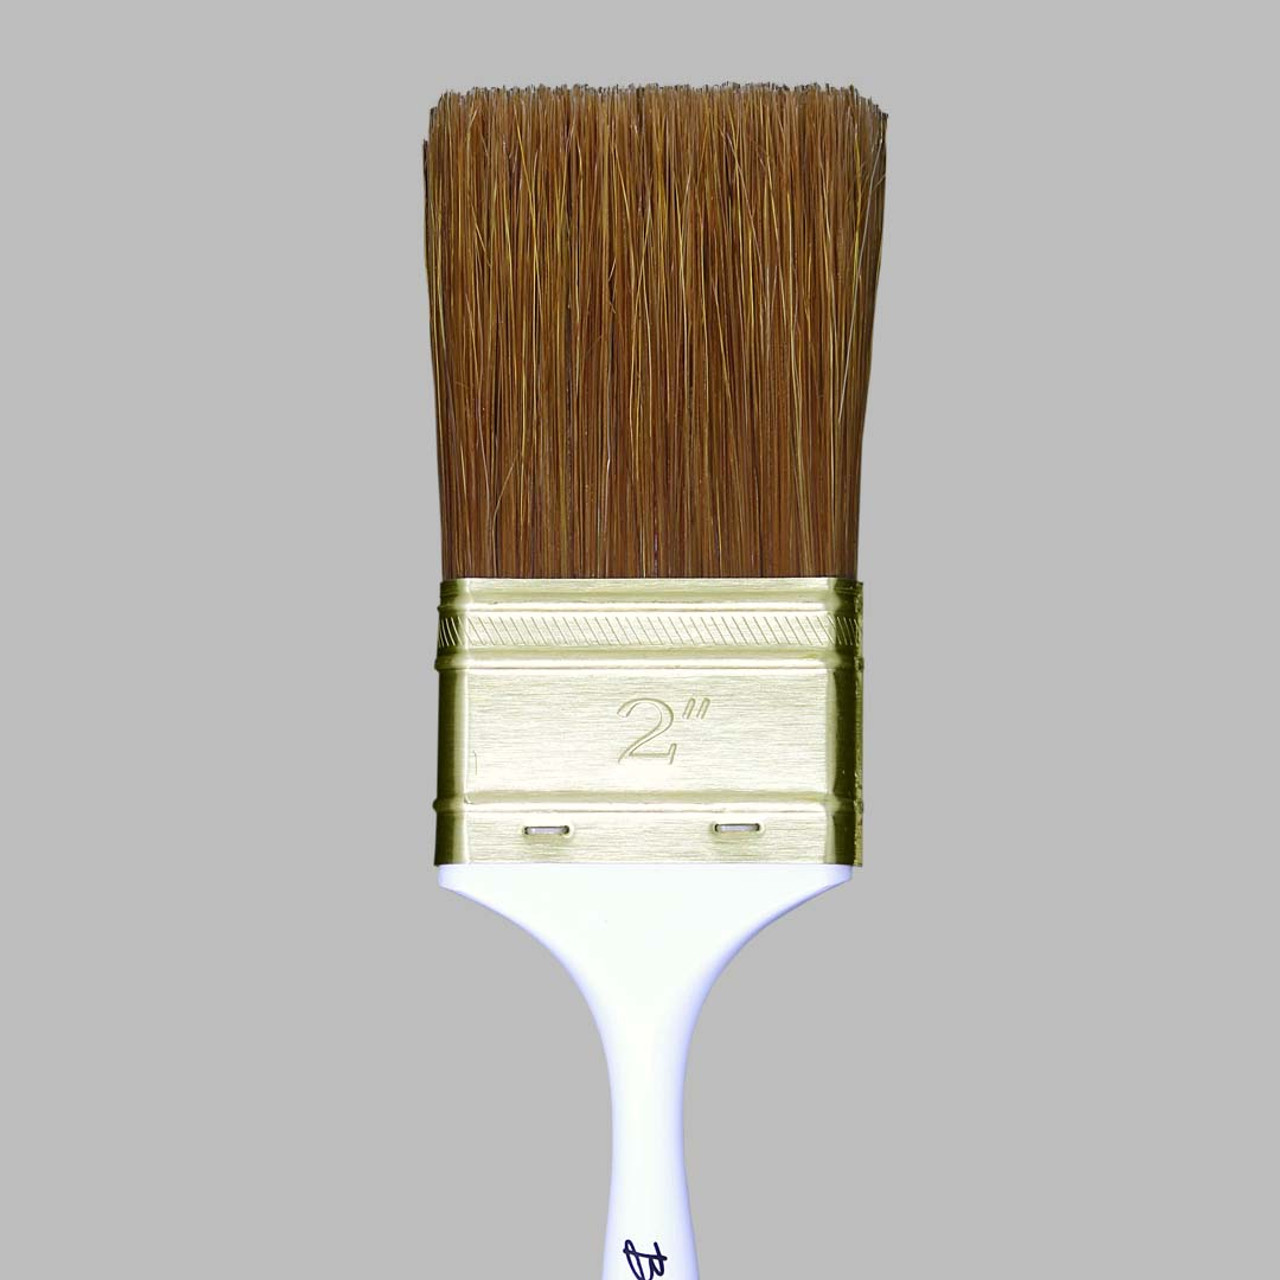 2 in. Paint Brush